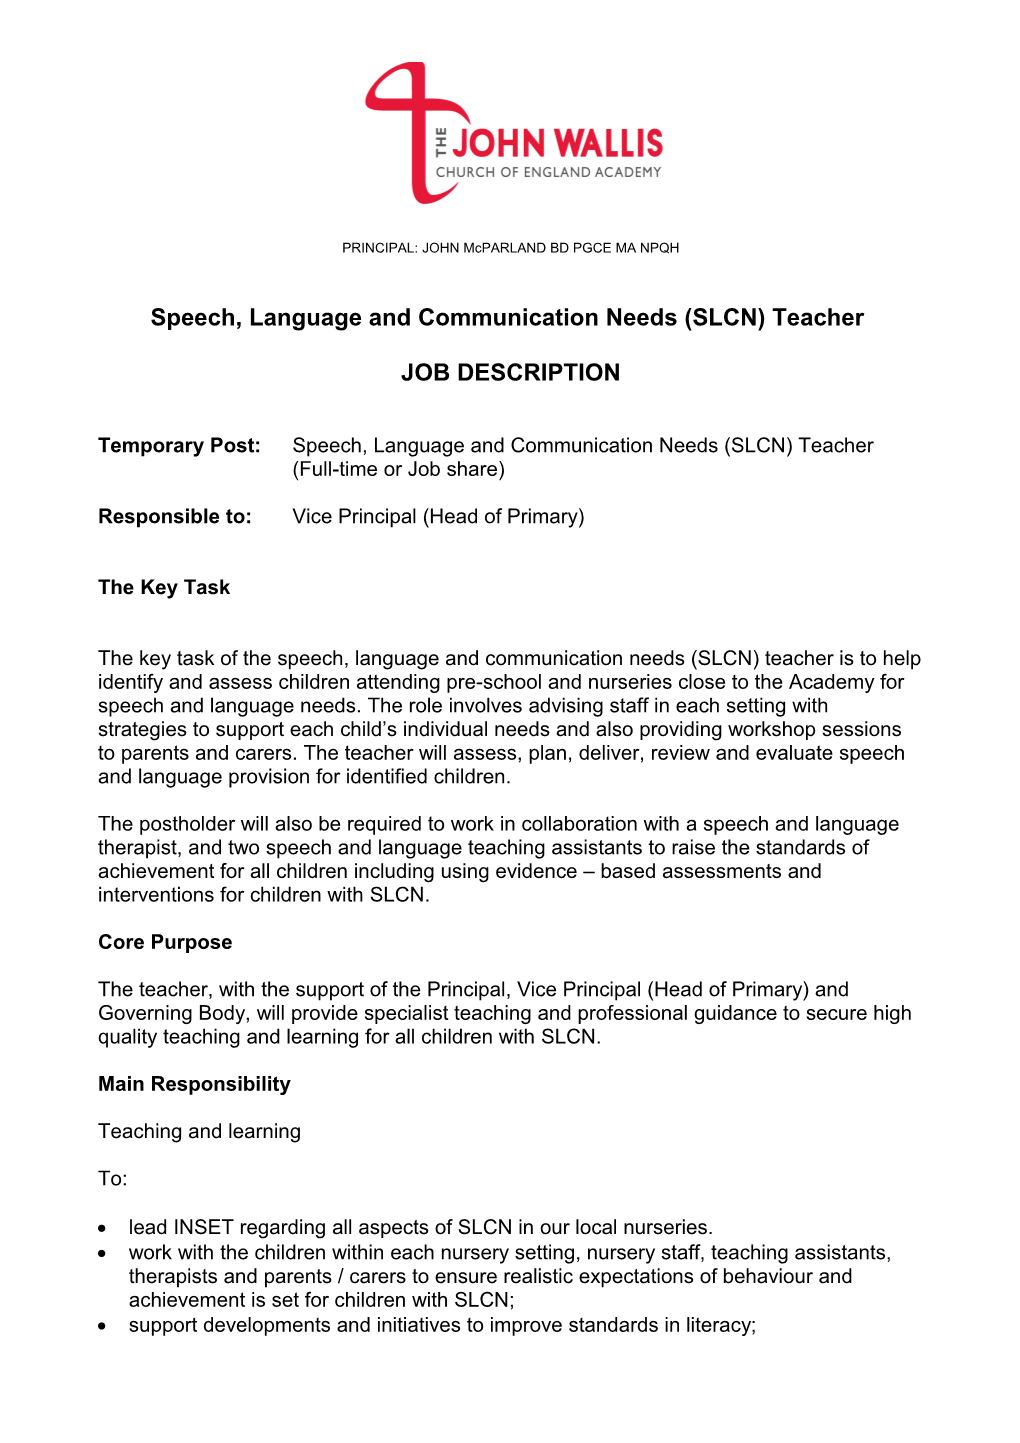 Speech, Language and Communication Needs (SLCN) Teacher